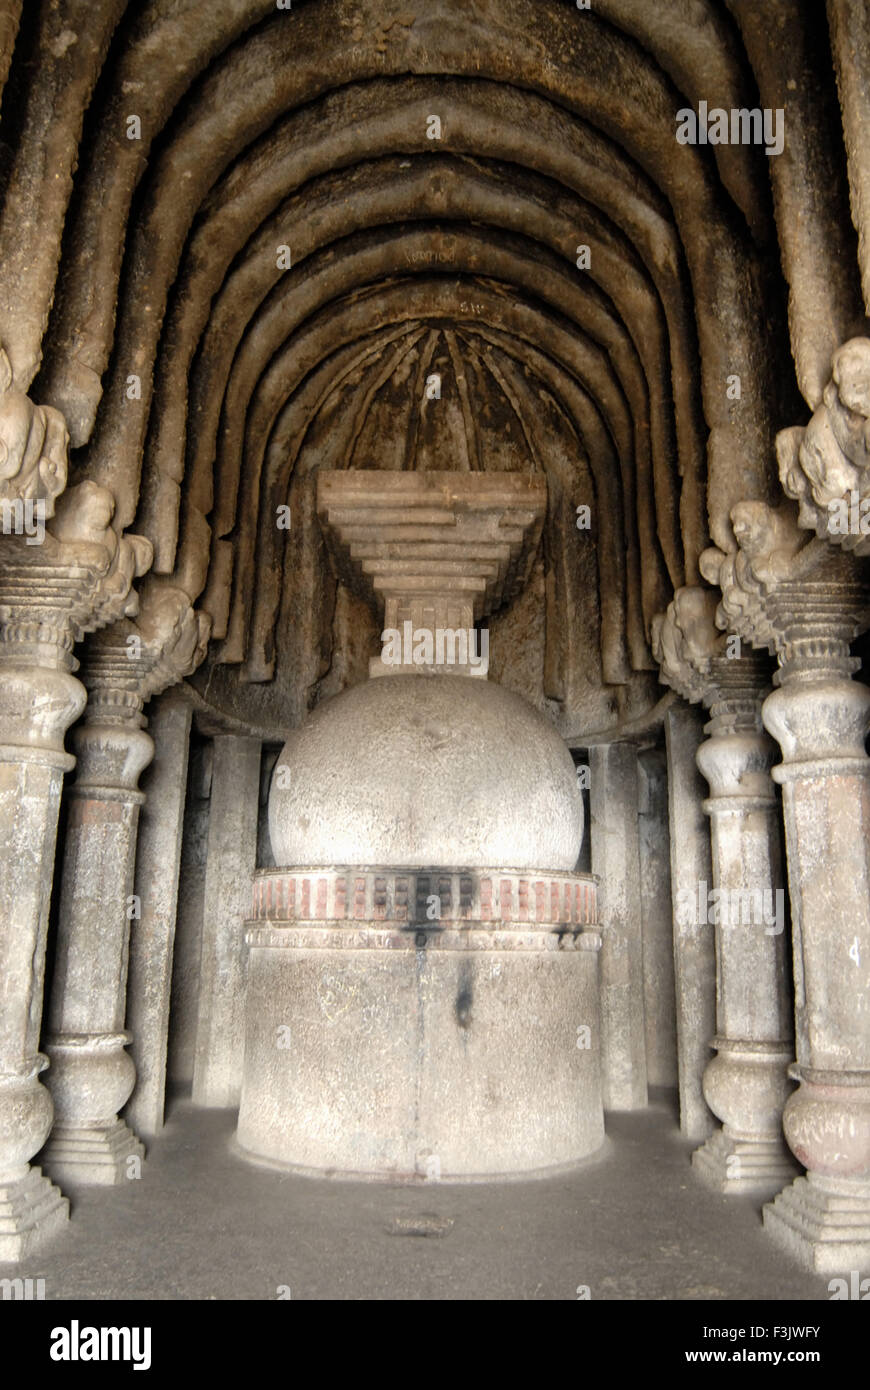 Riccamente scolpita in pietra stupa e pilastri in grotte buddista sulla montagna Ashtavinayak Lenyadri Junnar Pune India Maharashtra Foto Stock